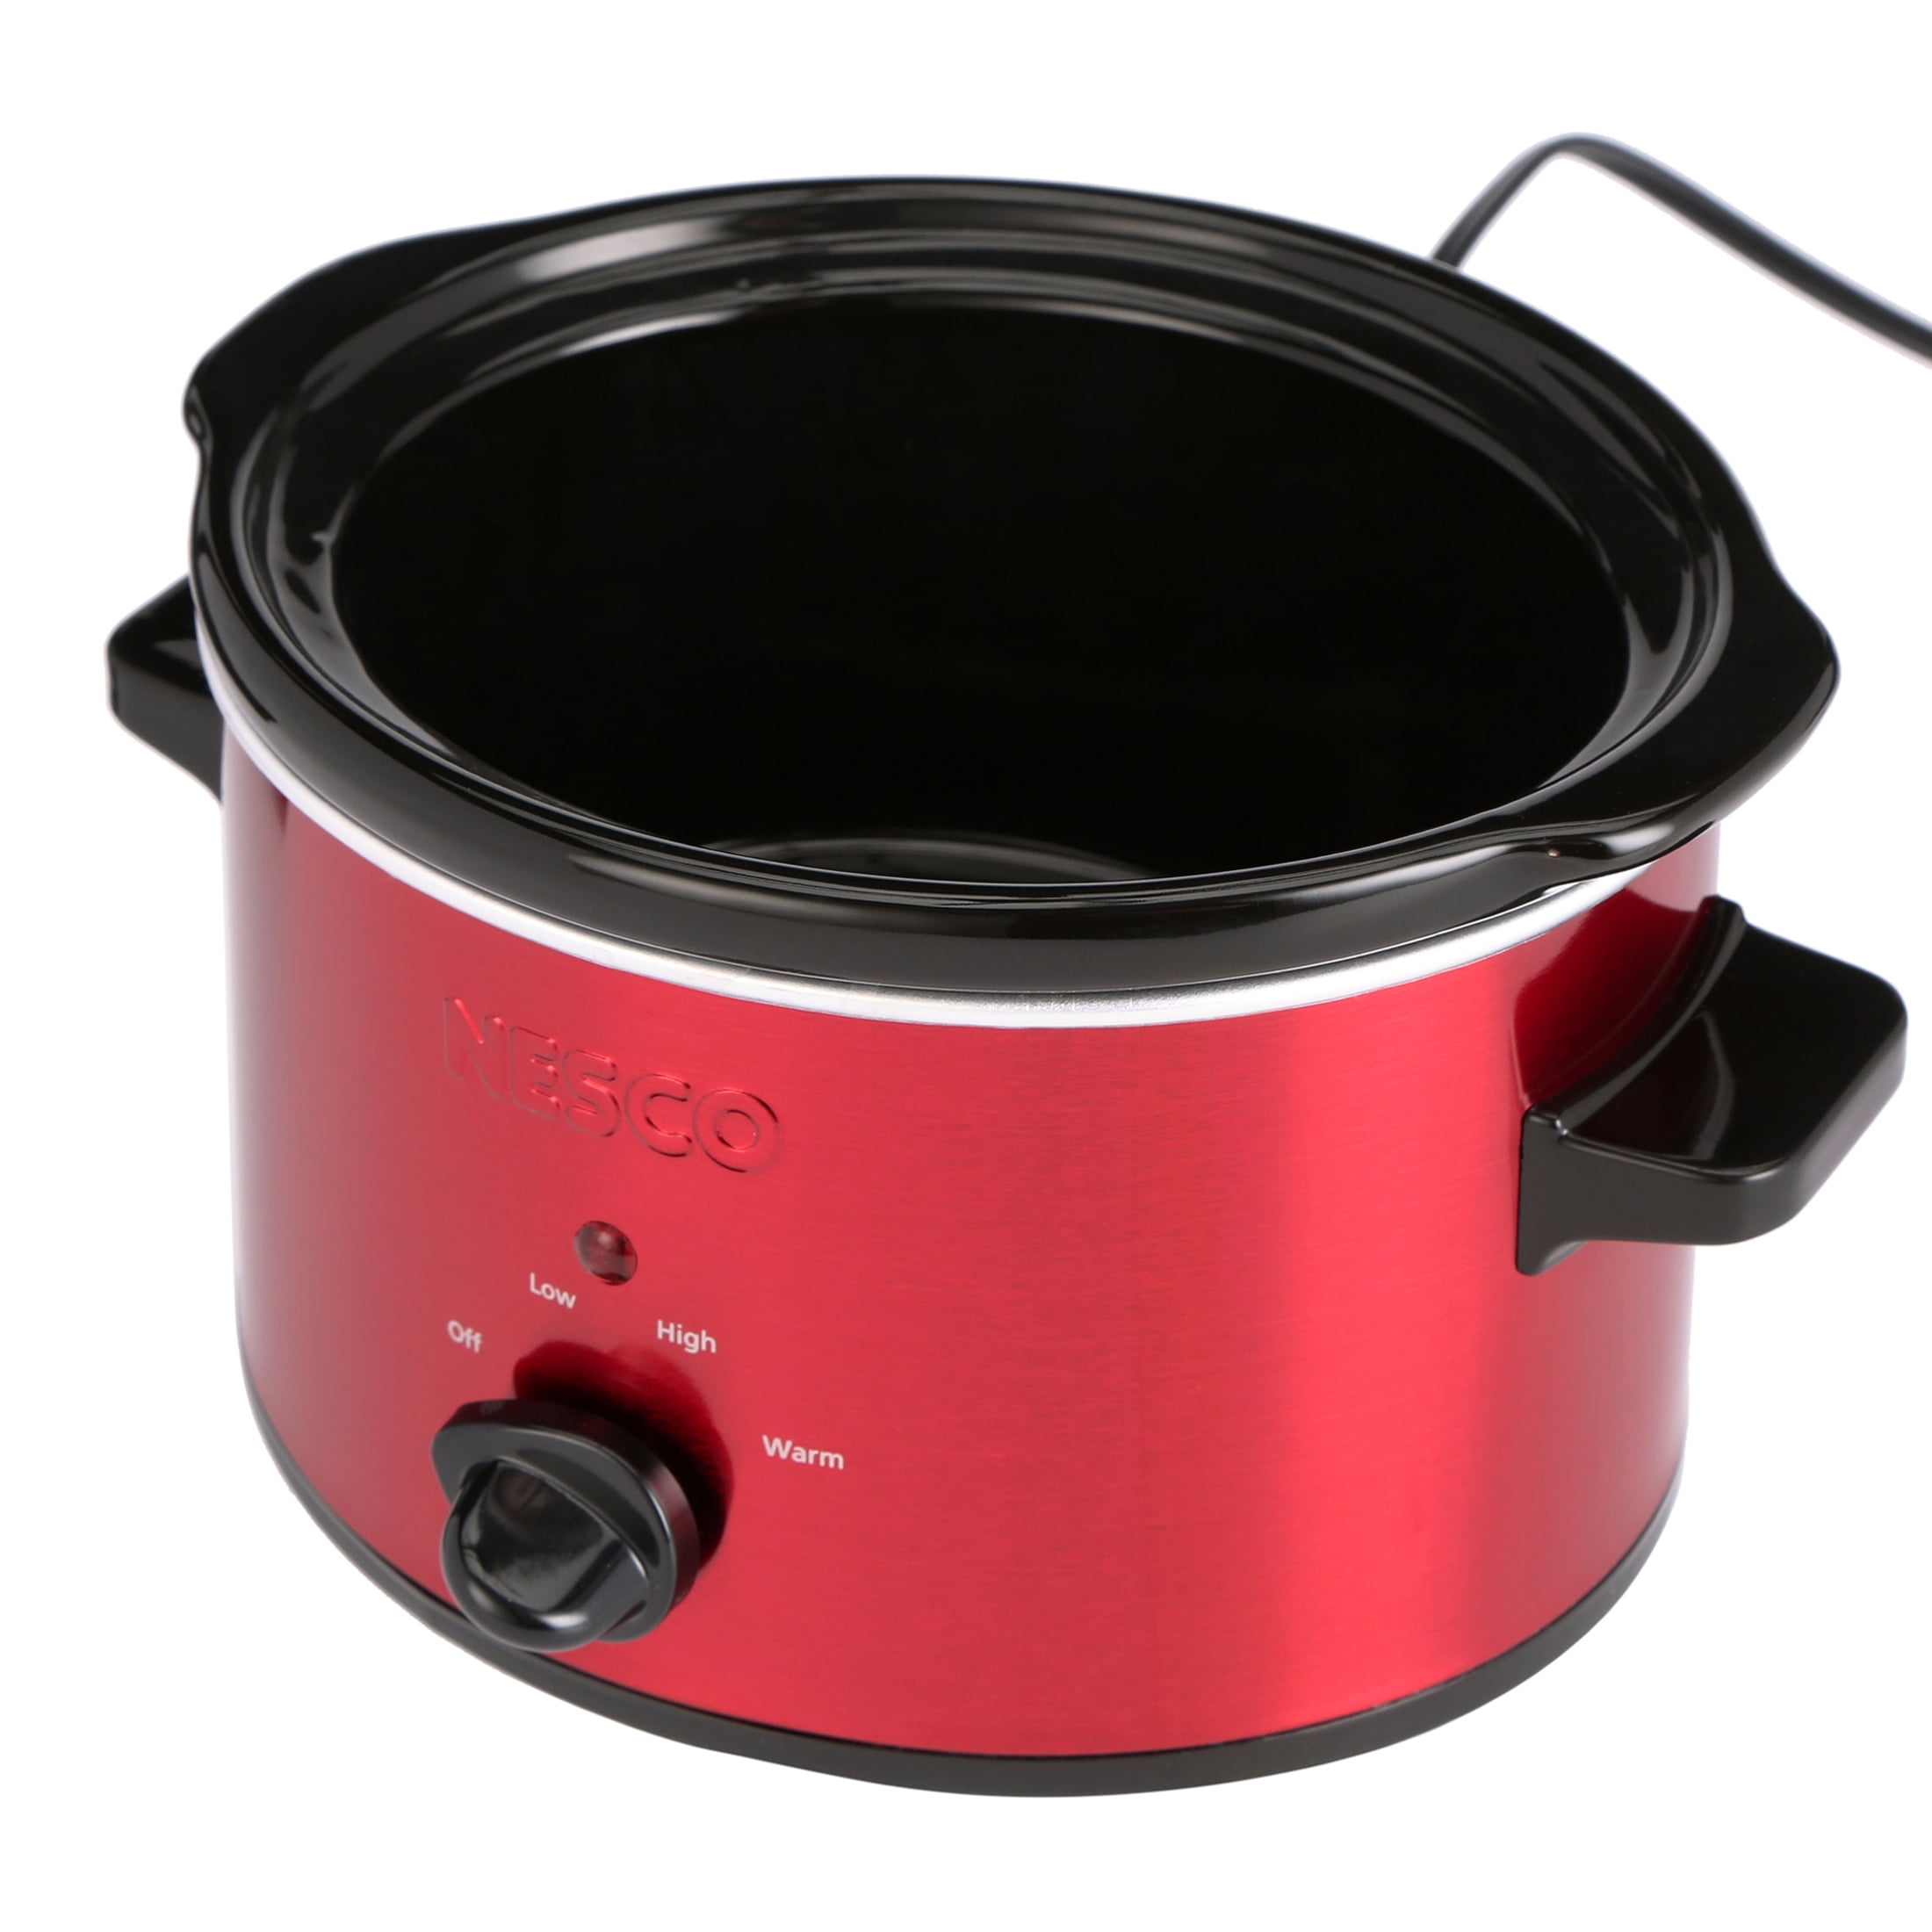 Crock-Pot Scr151r 1.5-quart Round Manual Slow Cooker Red for sale online